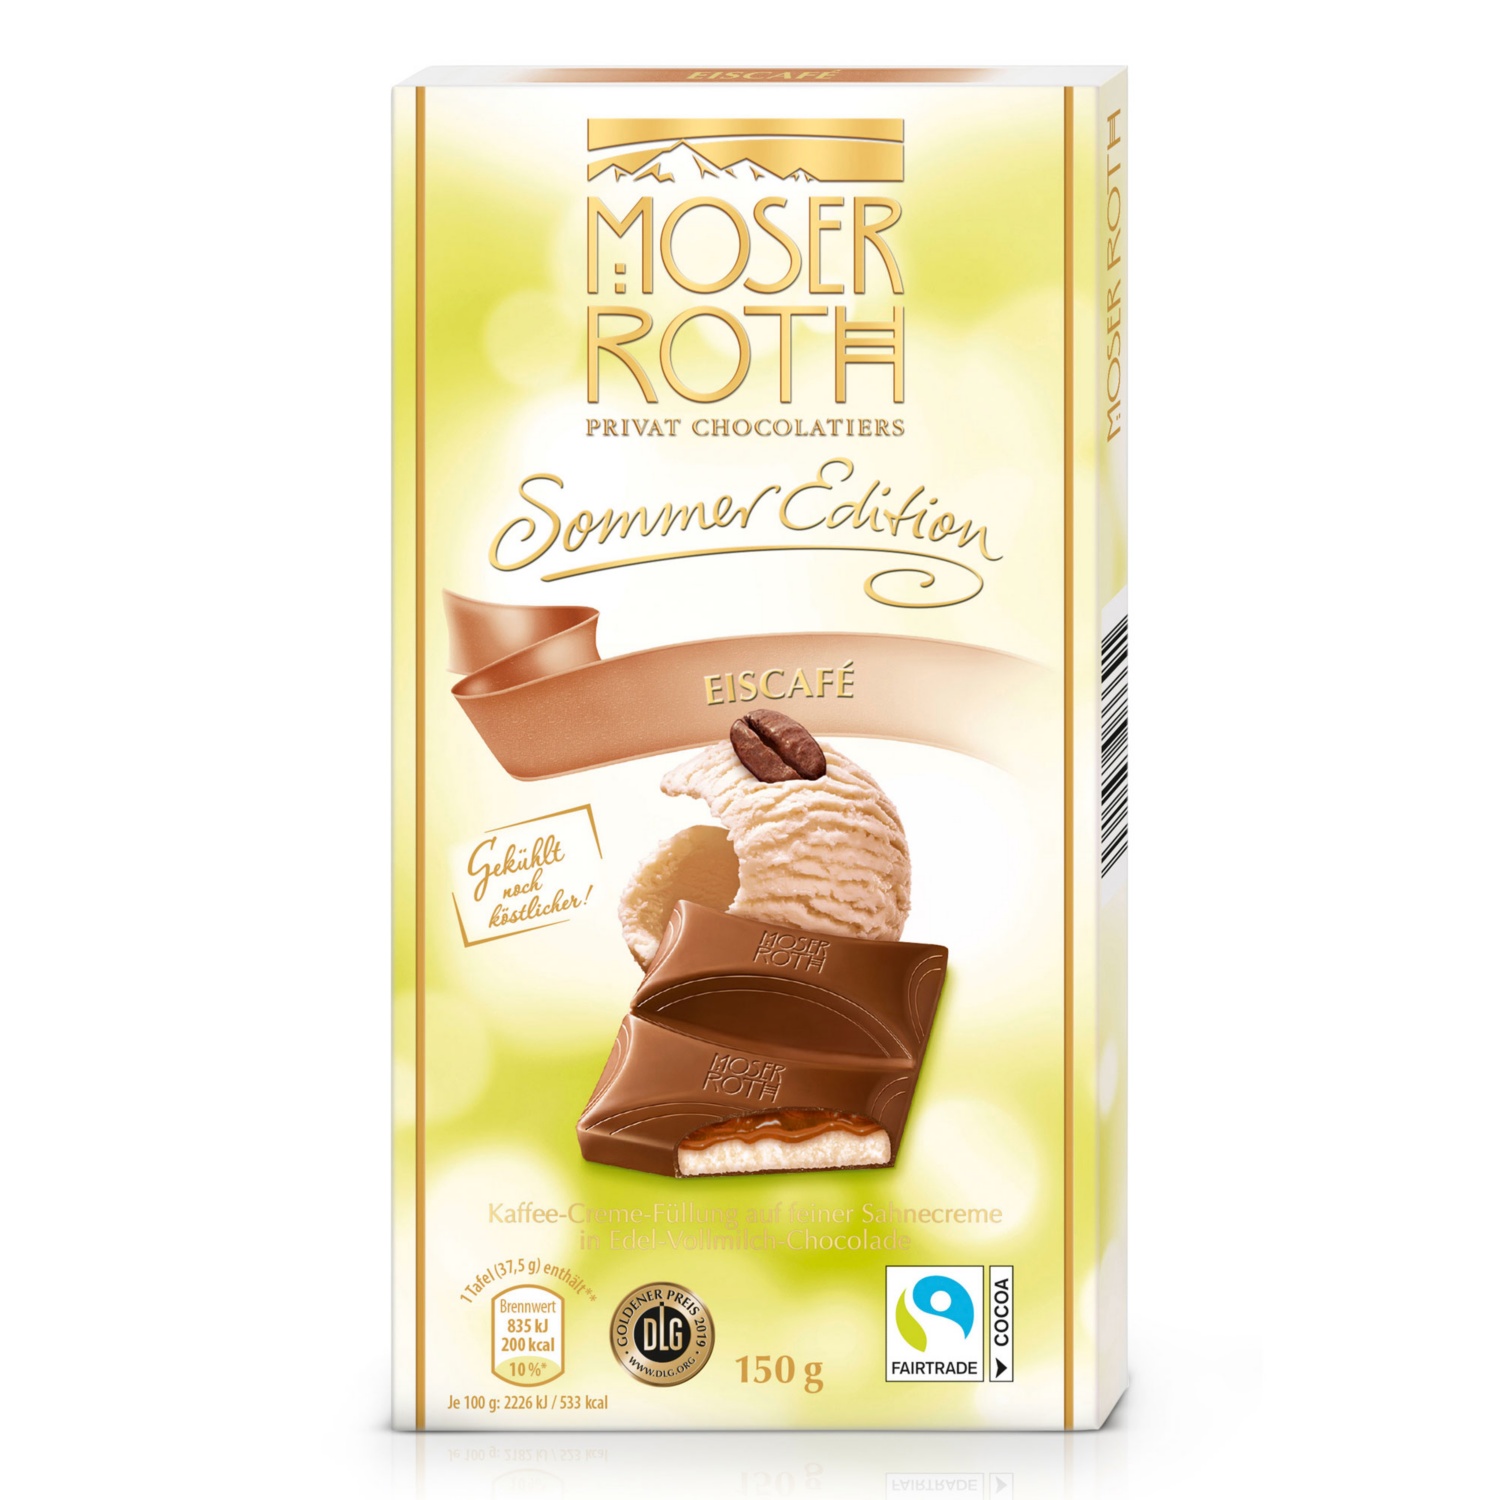 MOSER ROTH Gefüllte Sommerschokolade, Eiscafé